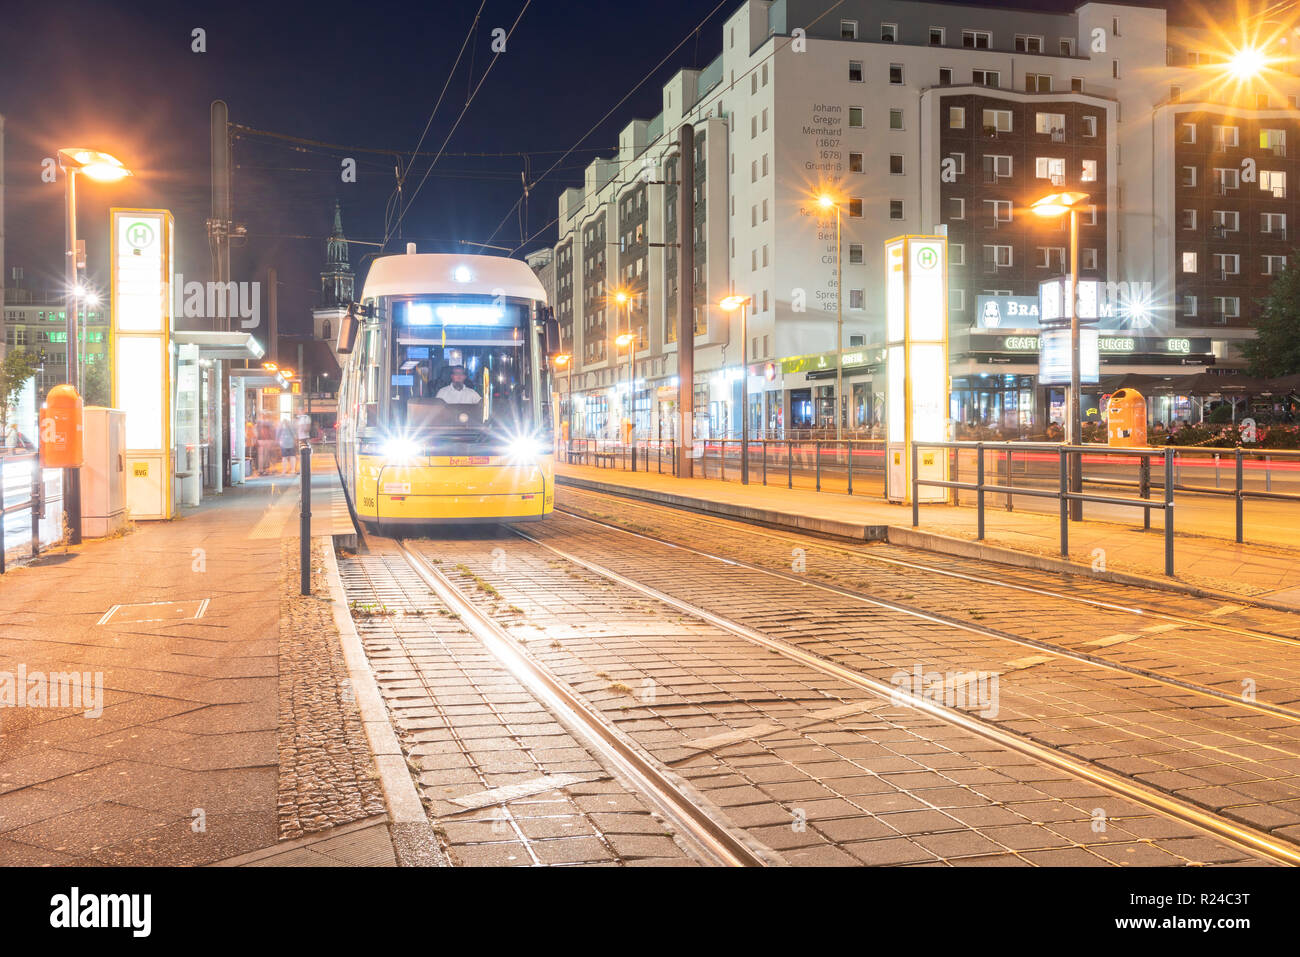 A tram station at Alexander Platz in Berlin Mitte by night, Berlin, Germany, Europe Stock Photo